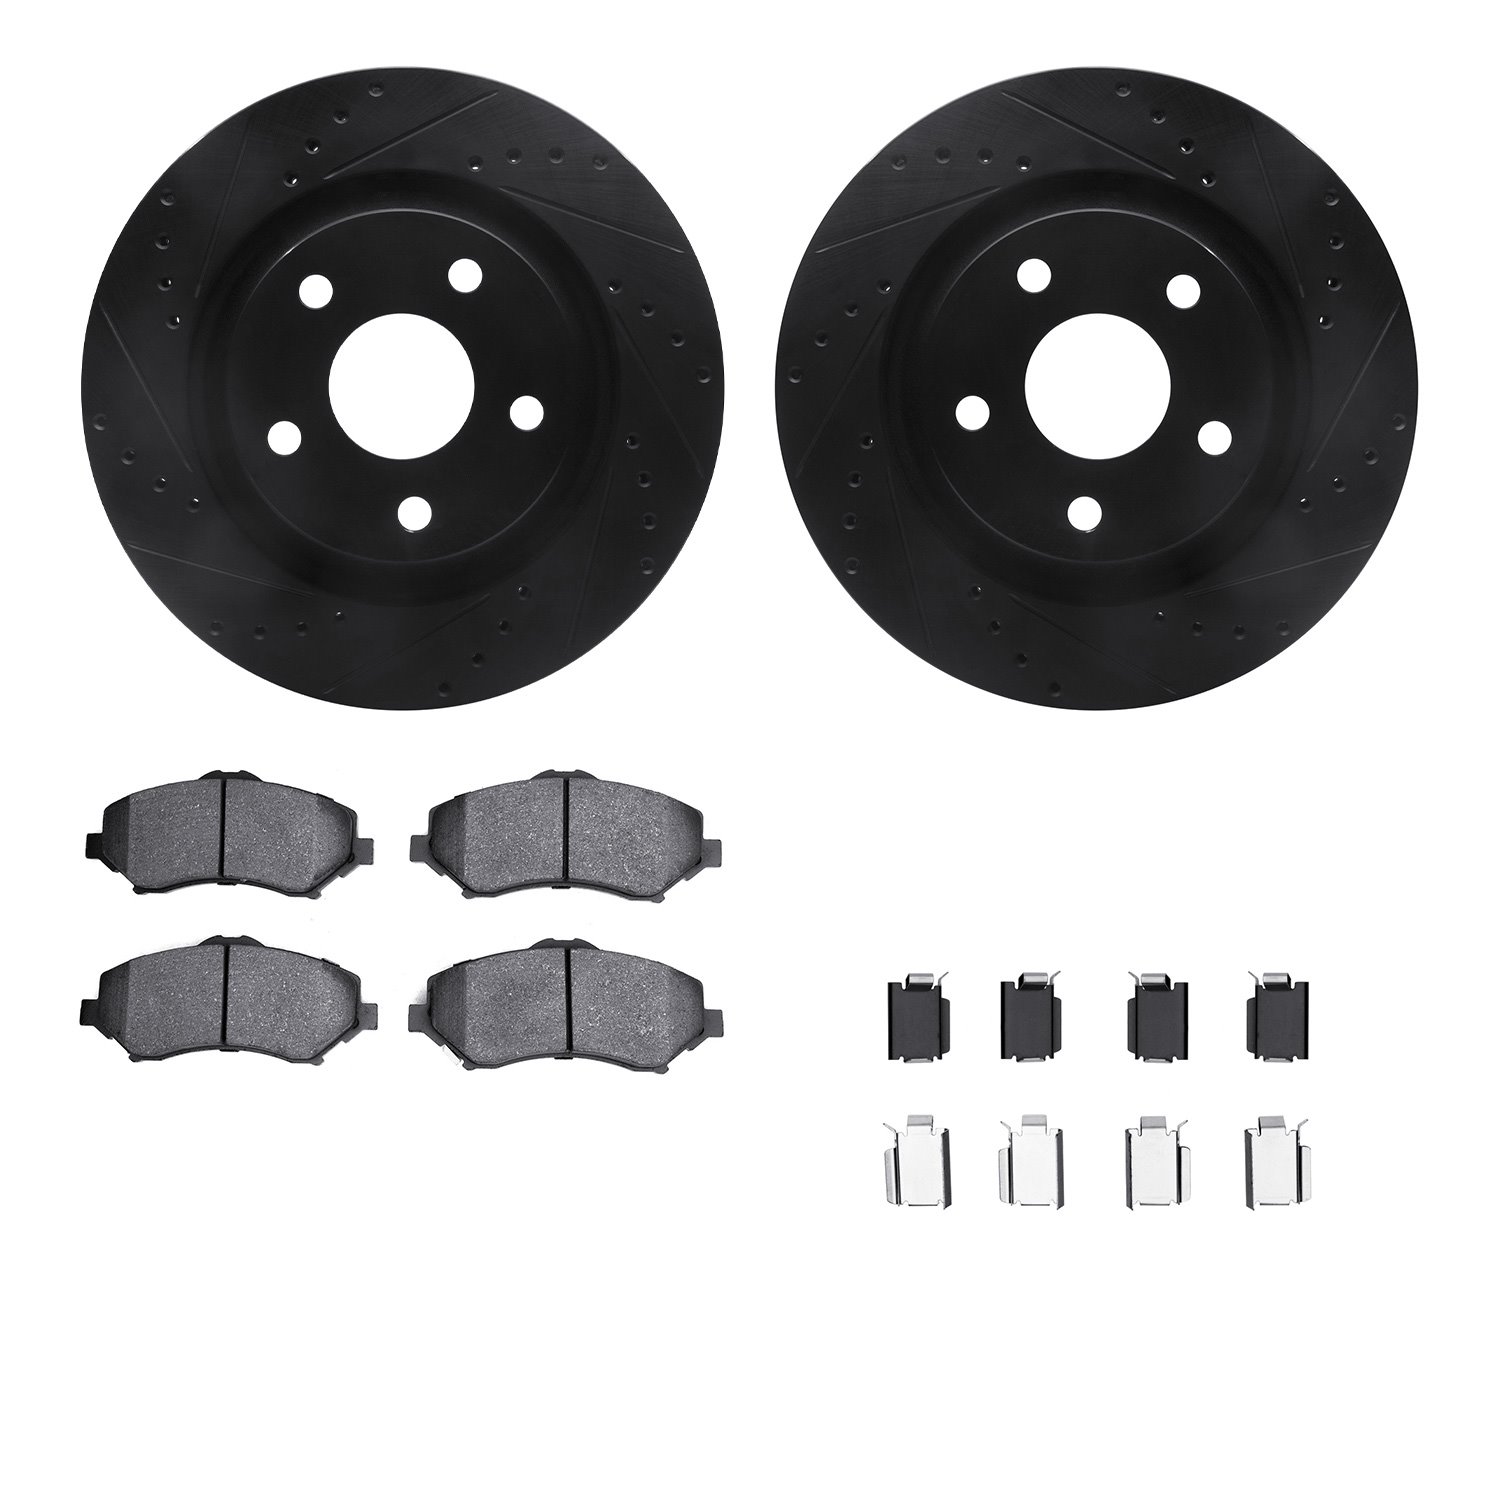 8412-42043 Drilled/Slotted Brake Rotors with Ultimate-Duty Brake Pads Kit & Hardware [Black], 2012-2018 Mopar, Position: Front